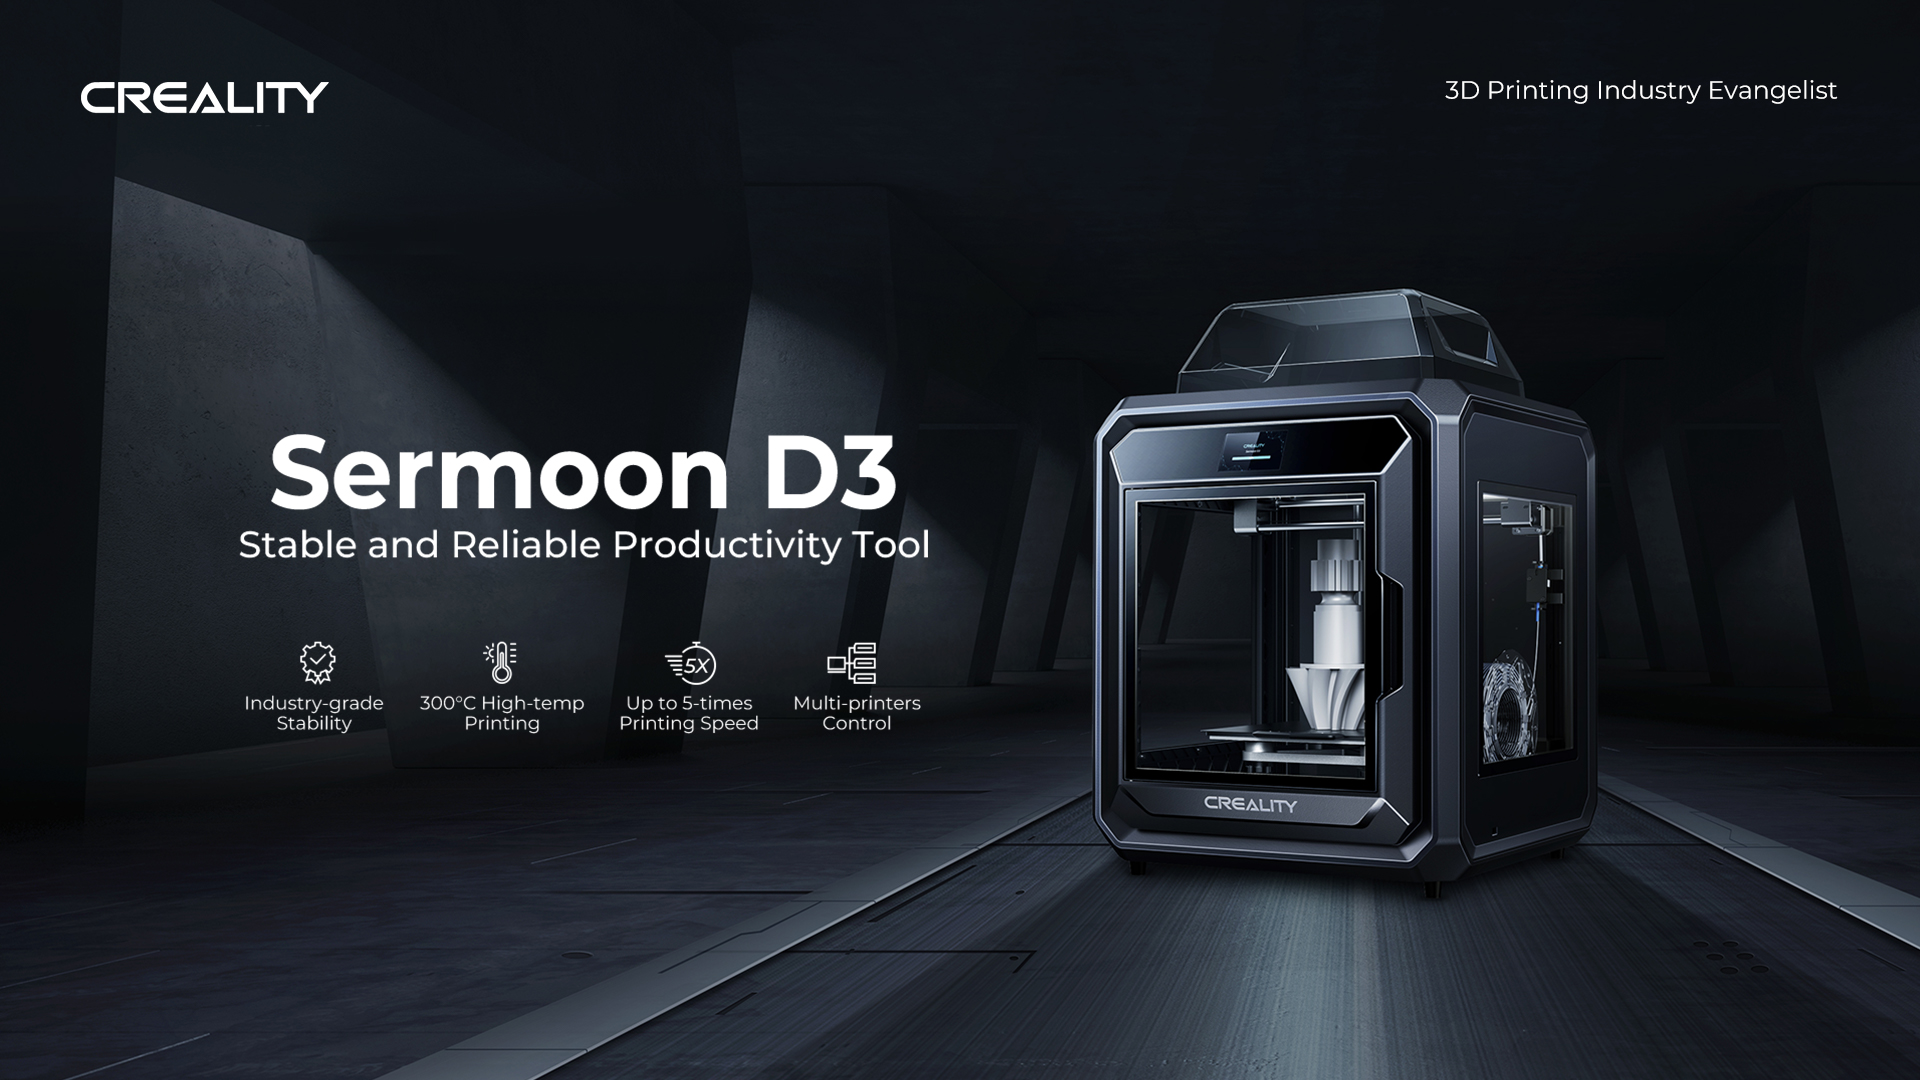 Creality Launches Professional-grade 3D Printer Sermoon D3